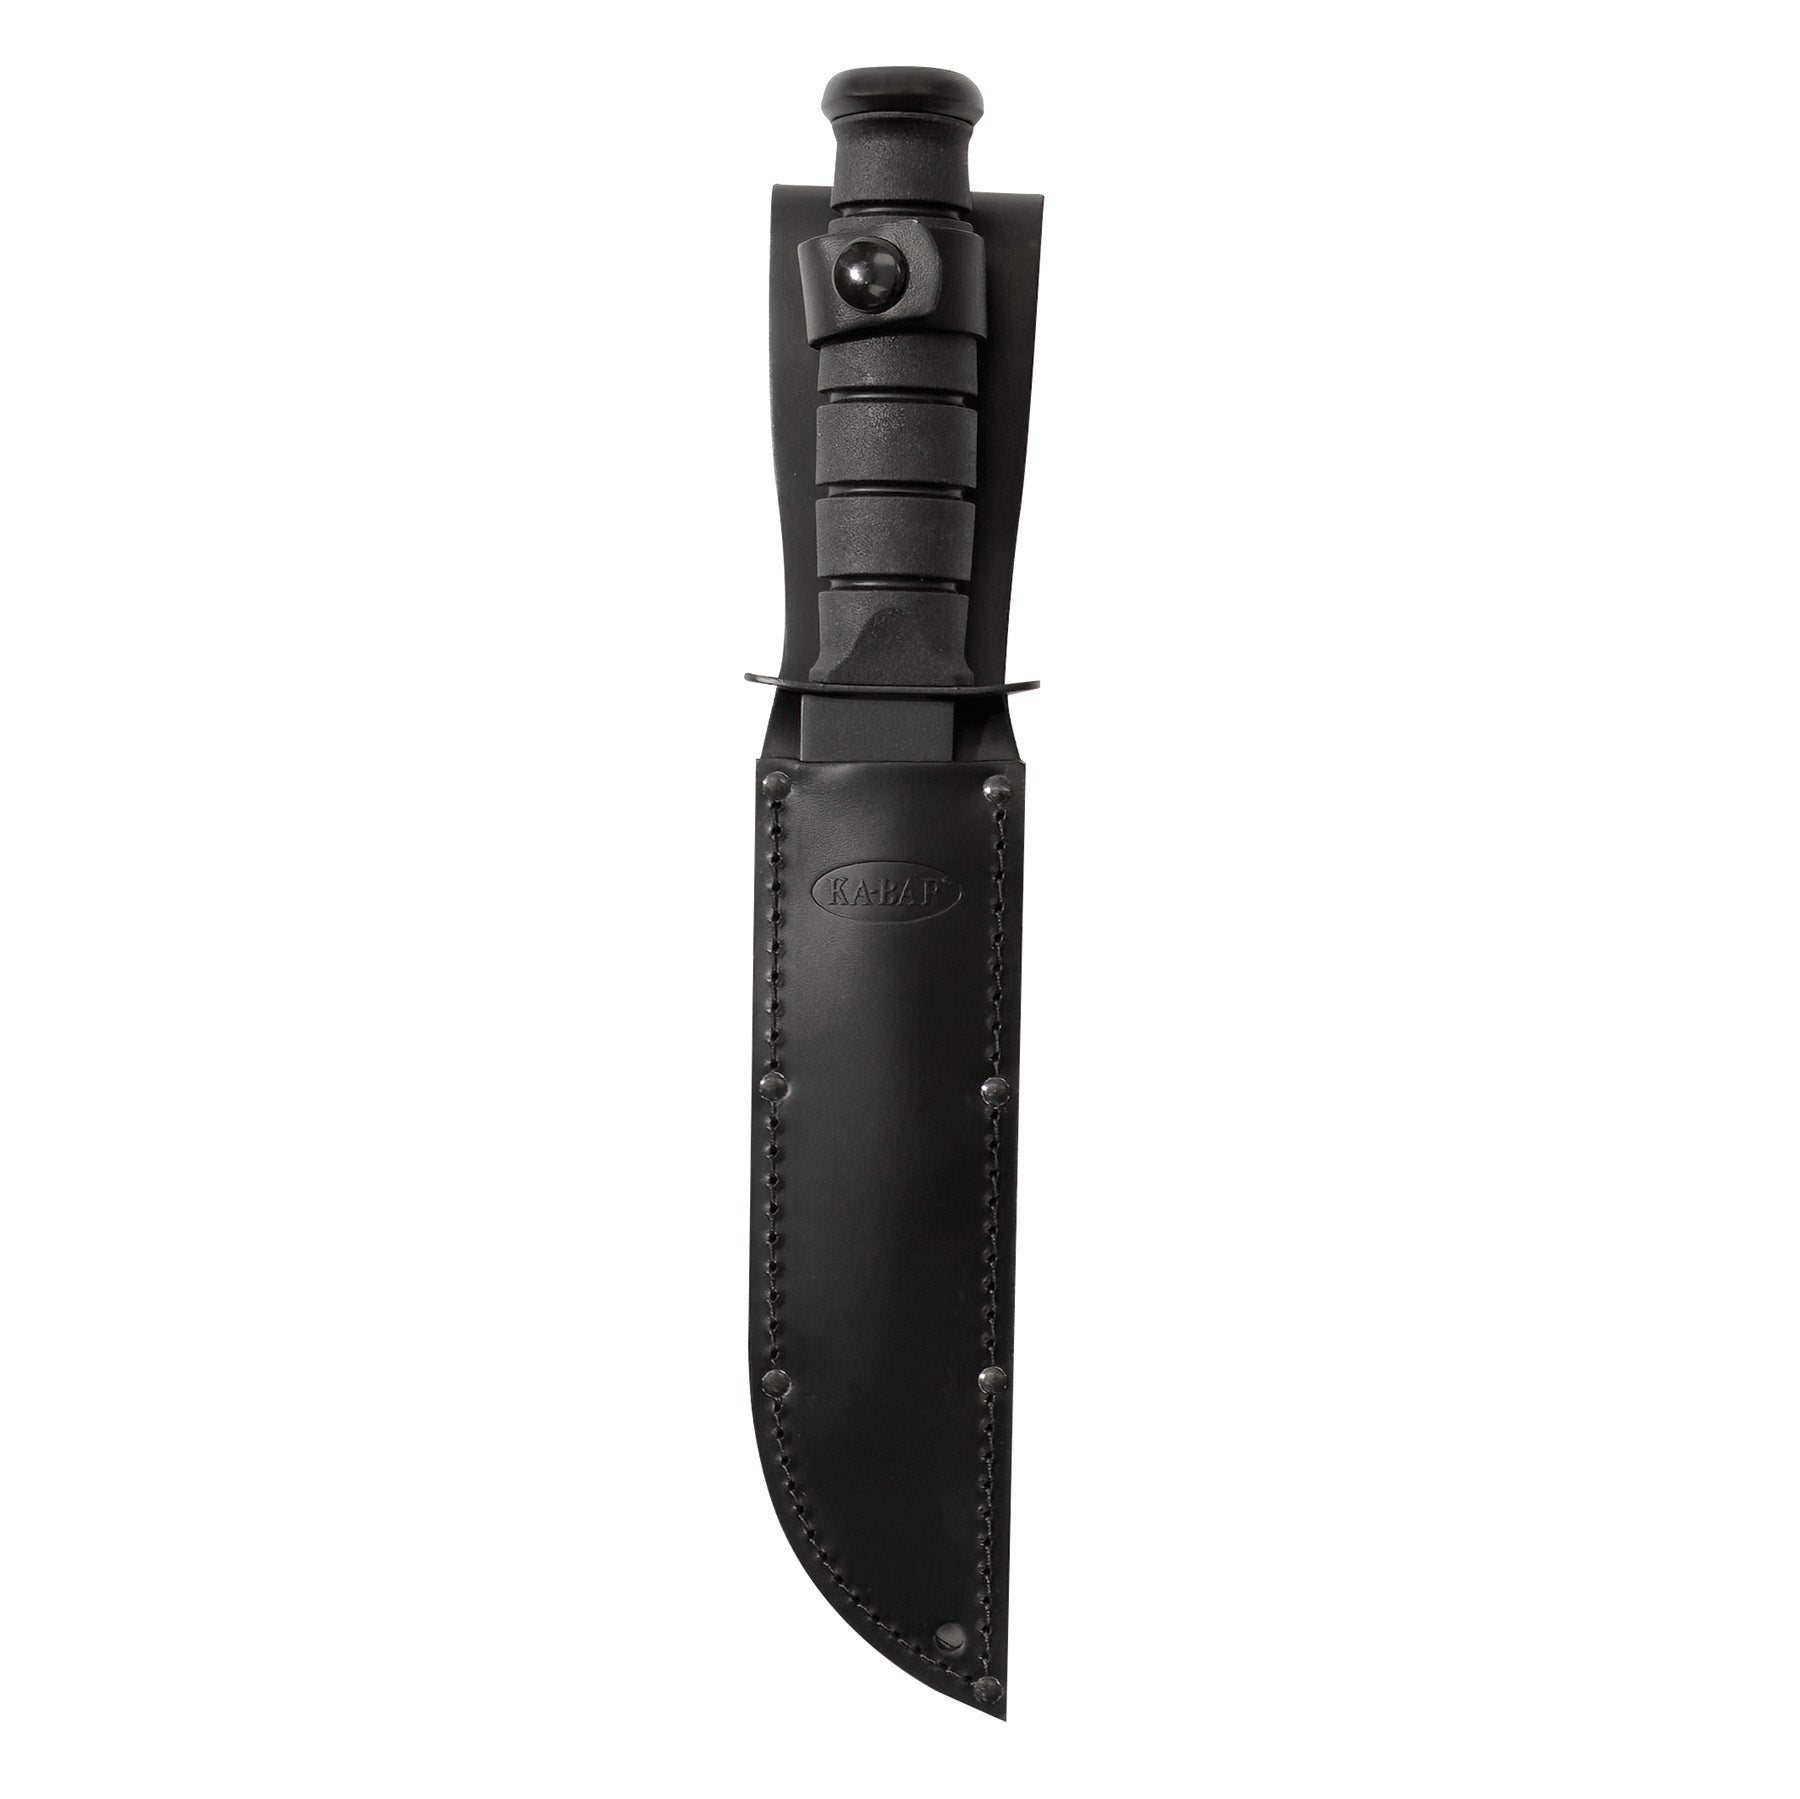 KA-BAR Full Size All-purpose Knife - Black - Tactical Choice Plus